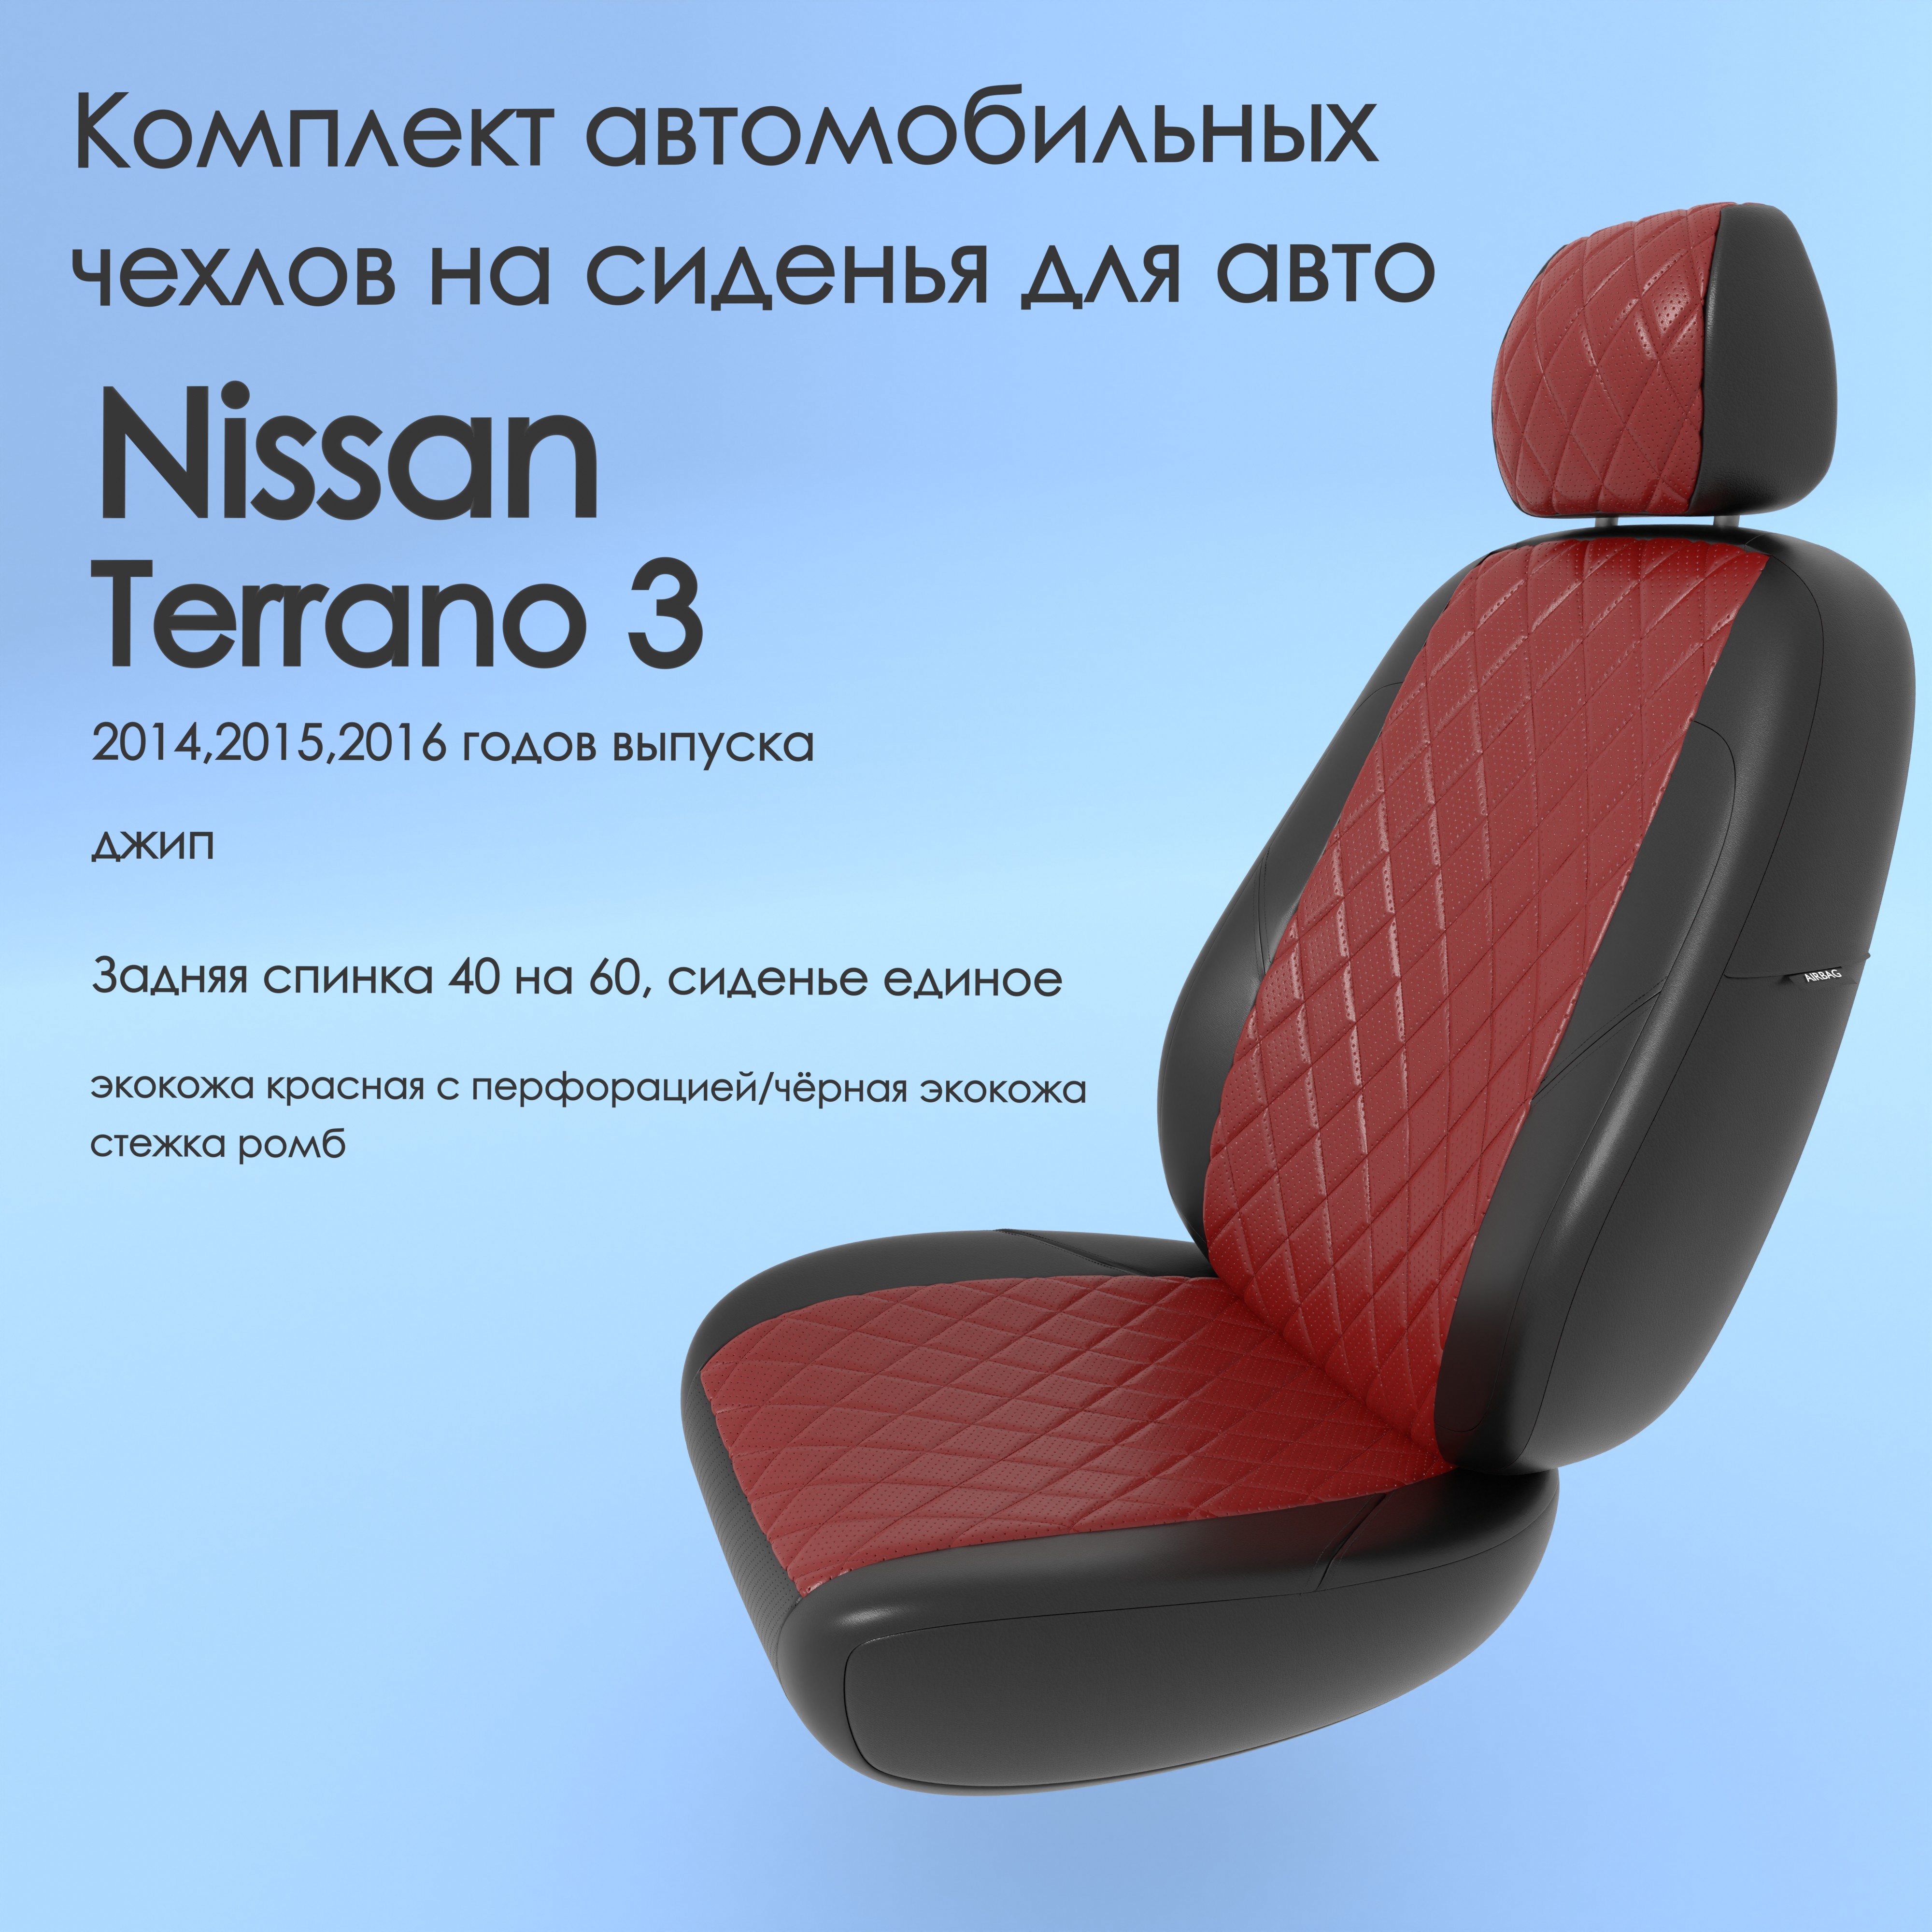 Чехлы Чехломания Nissan Terrano 3 2014,2015,2016 джип 40/60 кр/чер-эк/ркр1